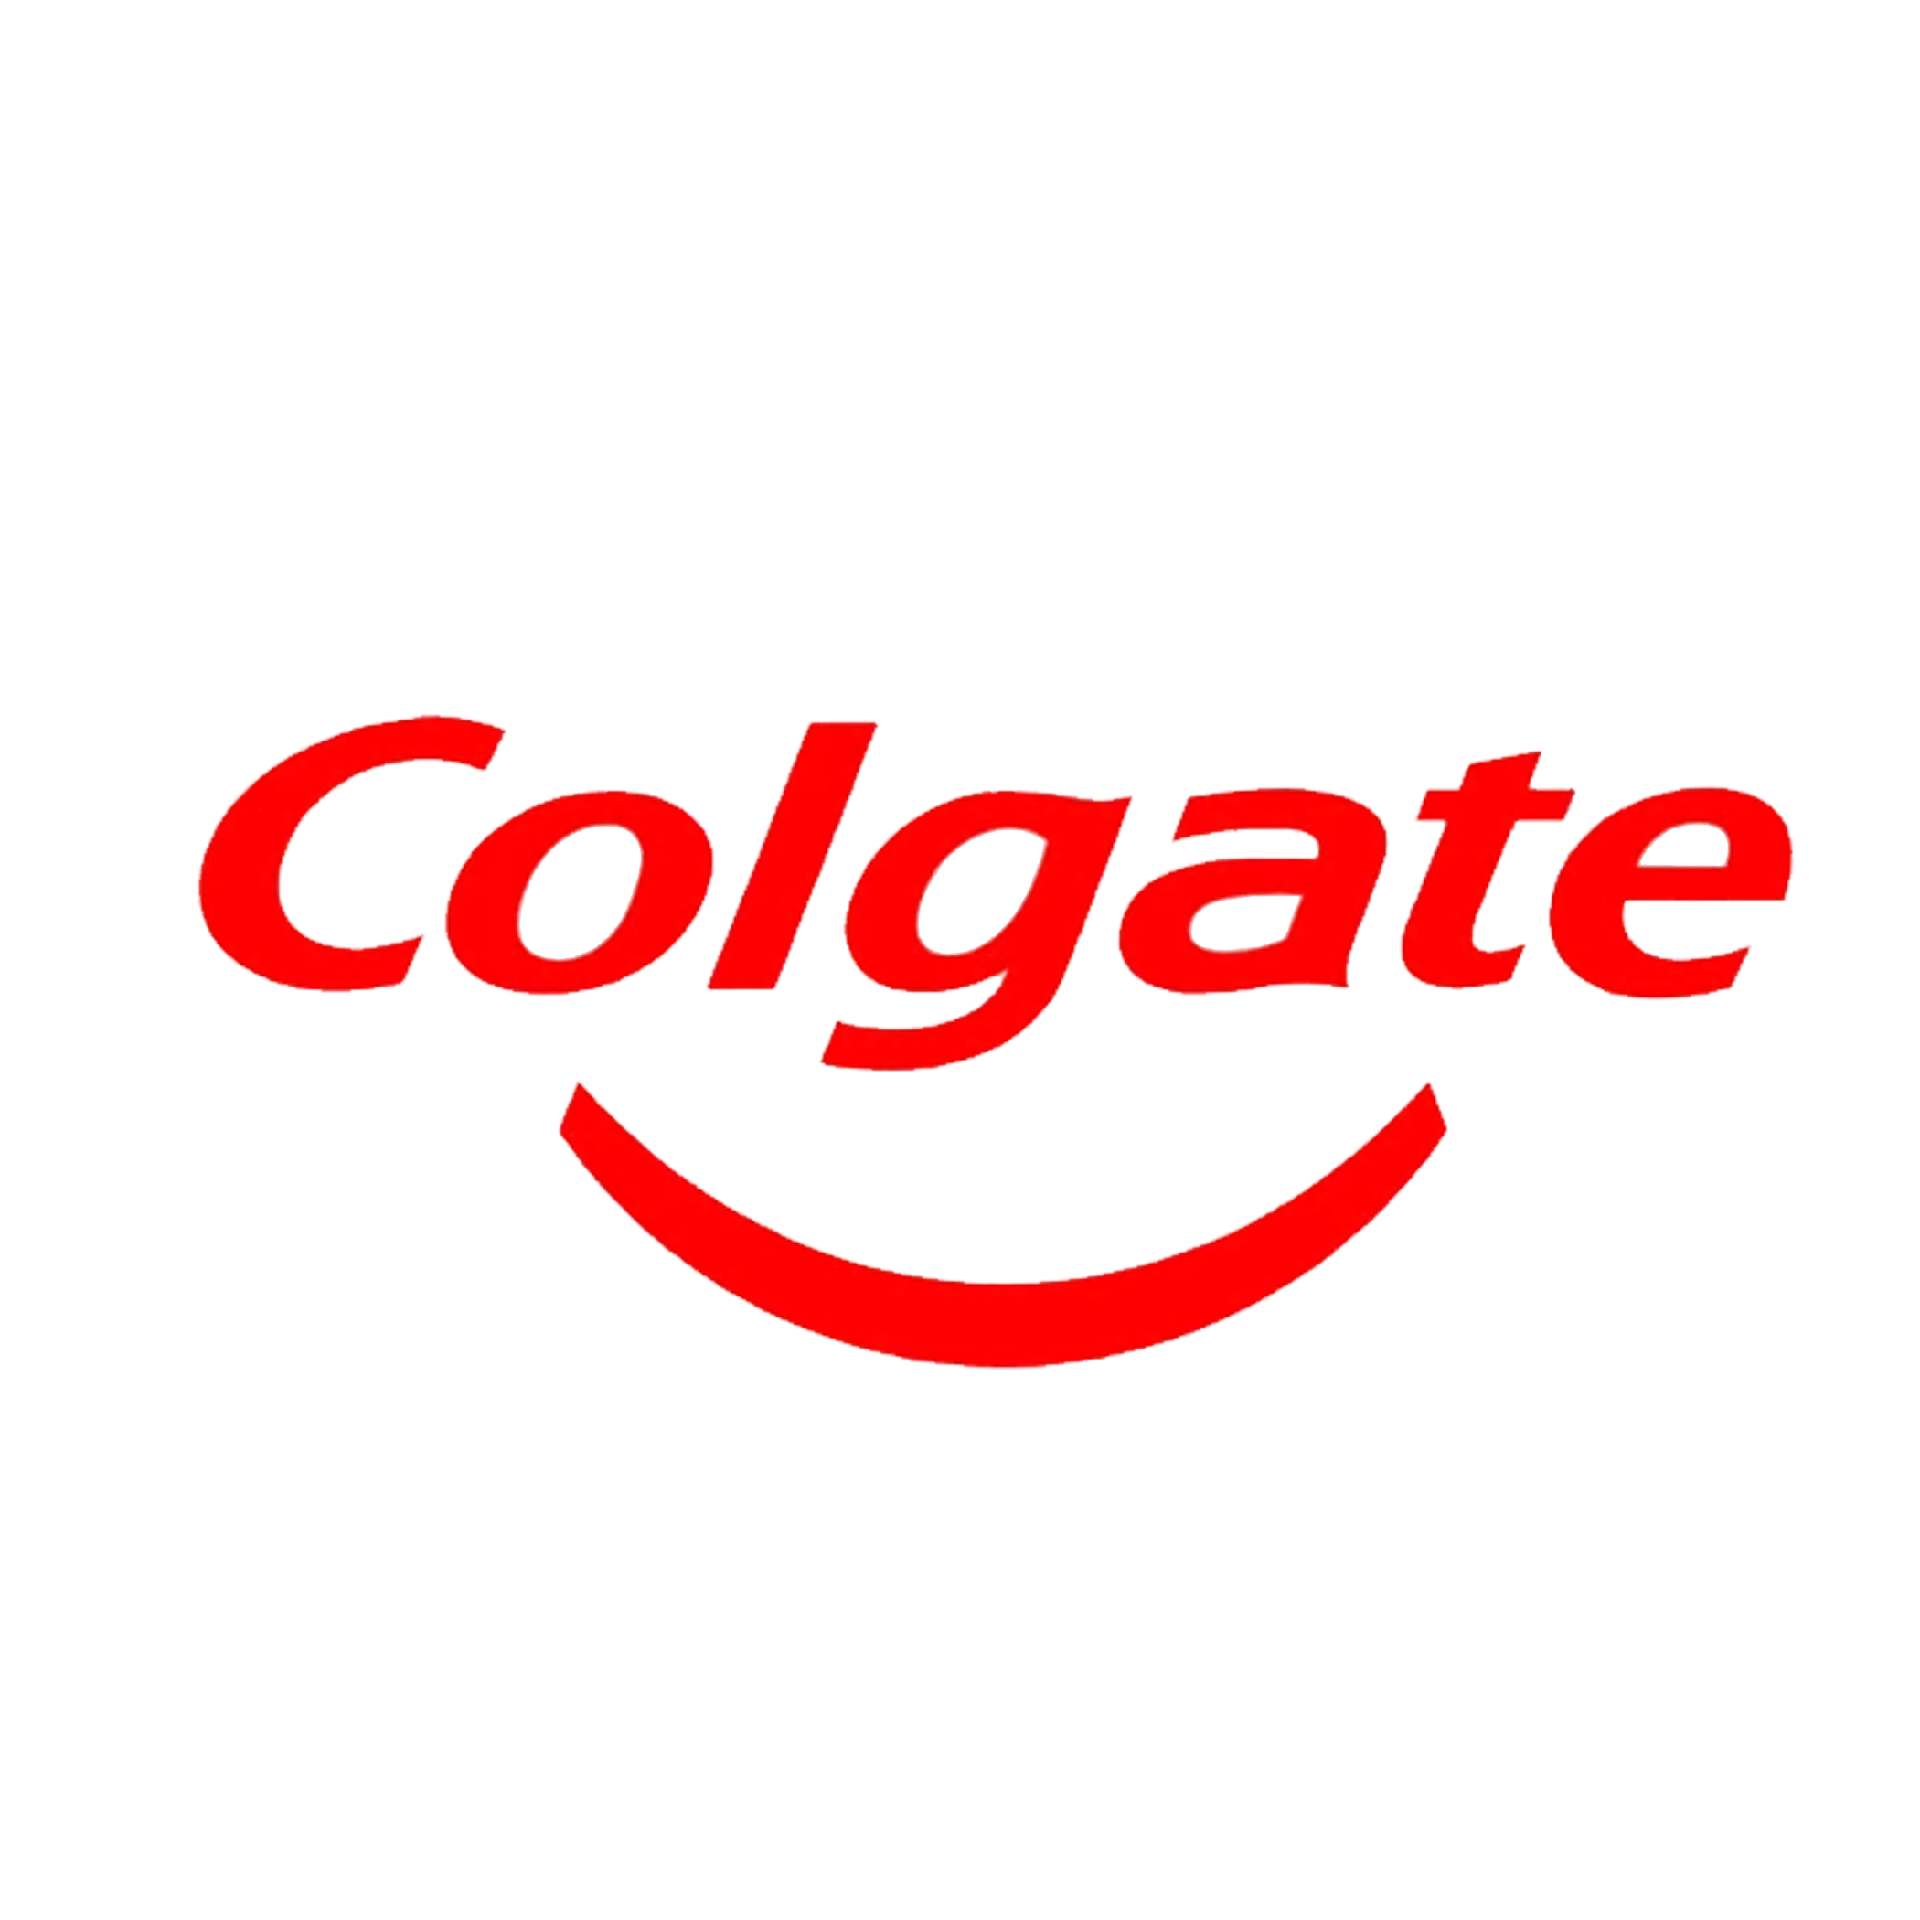 Product Brand: colgate